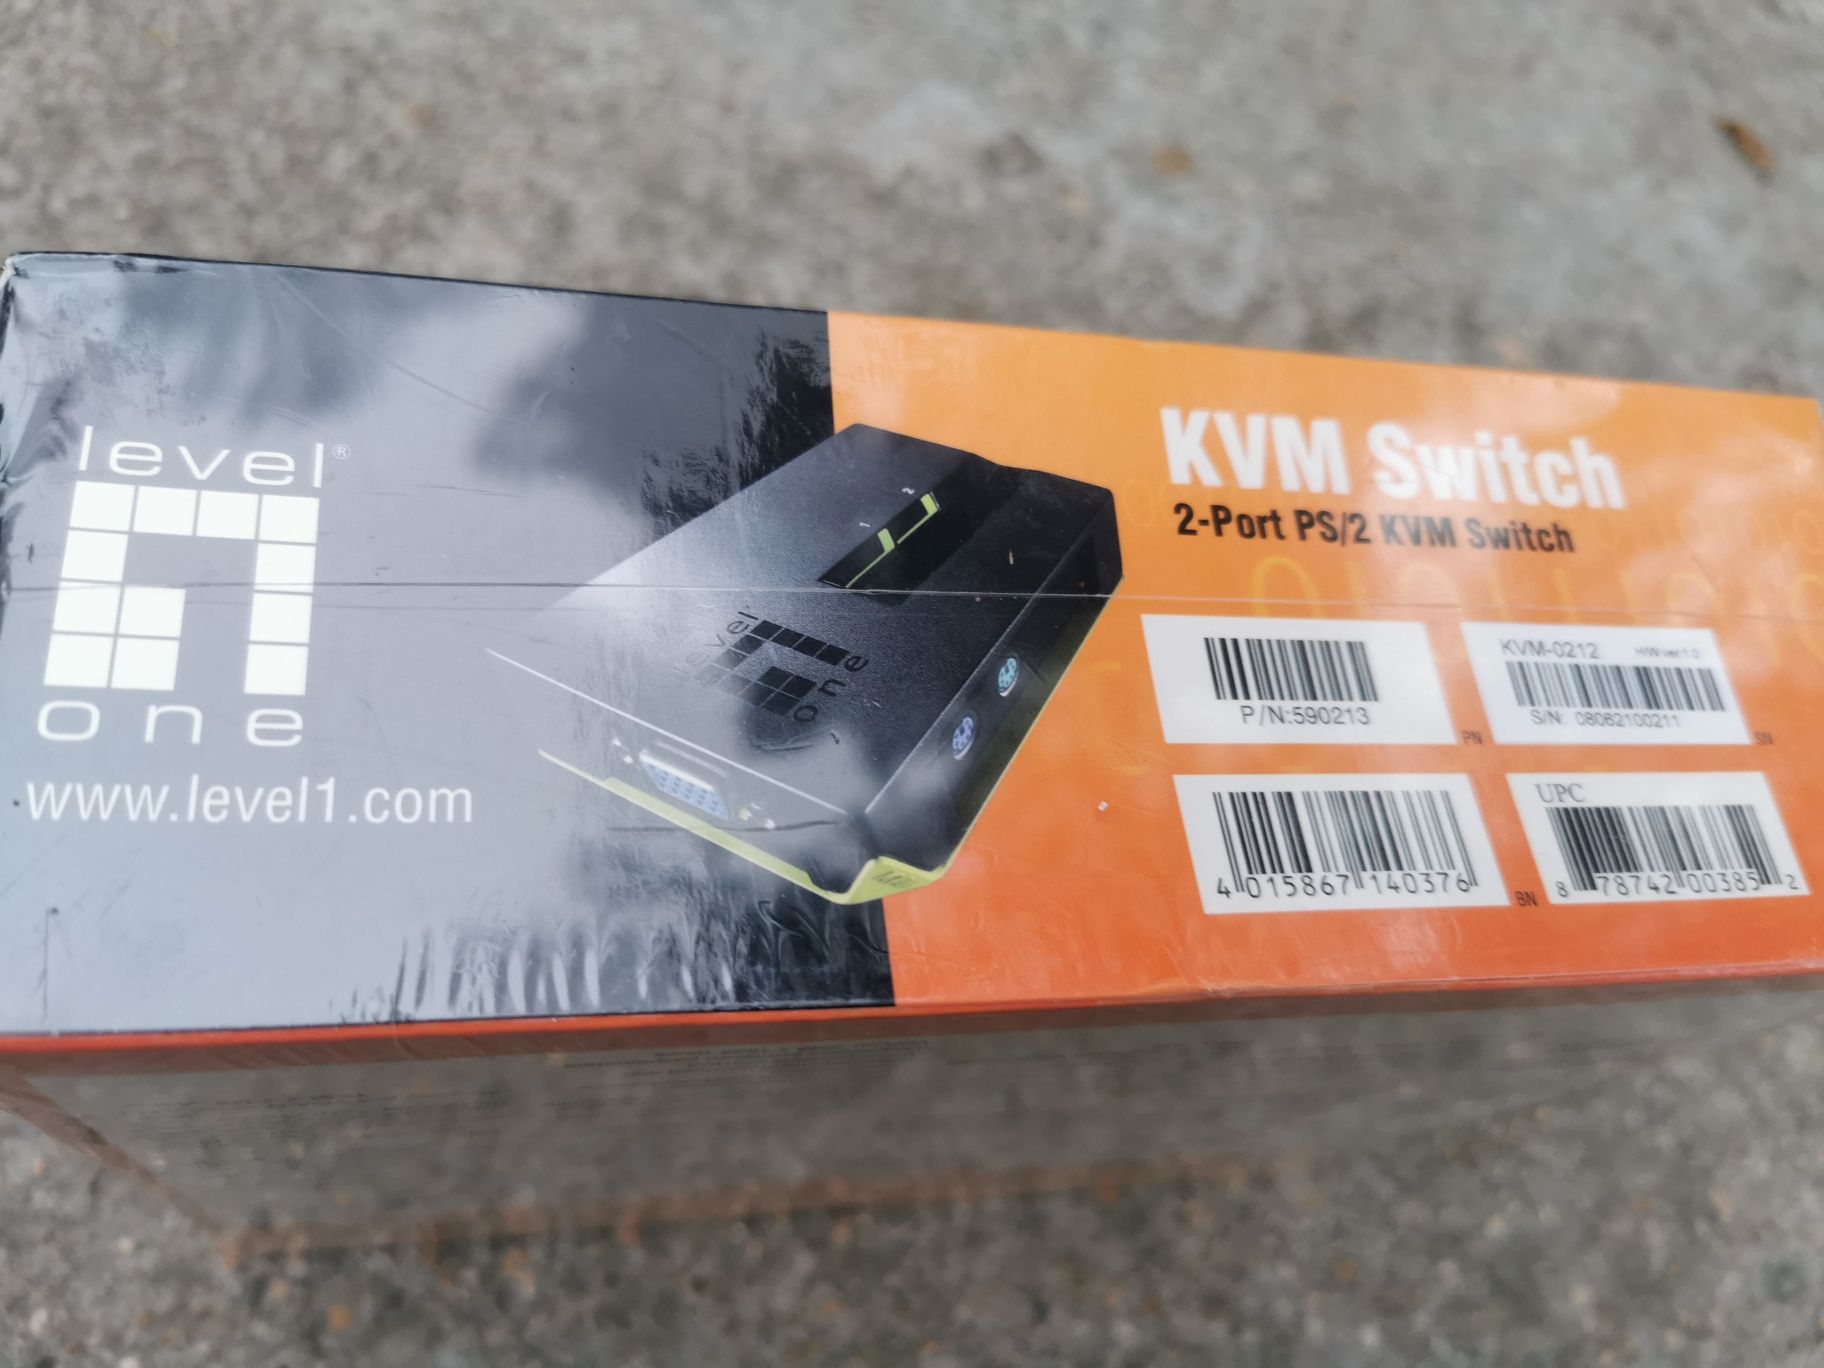 KVM switch 2 port PS/2